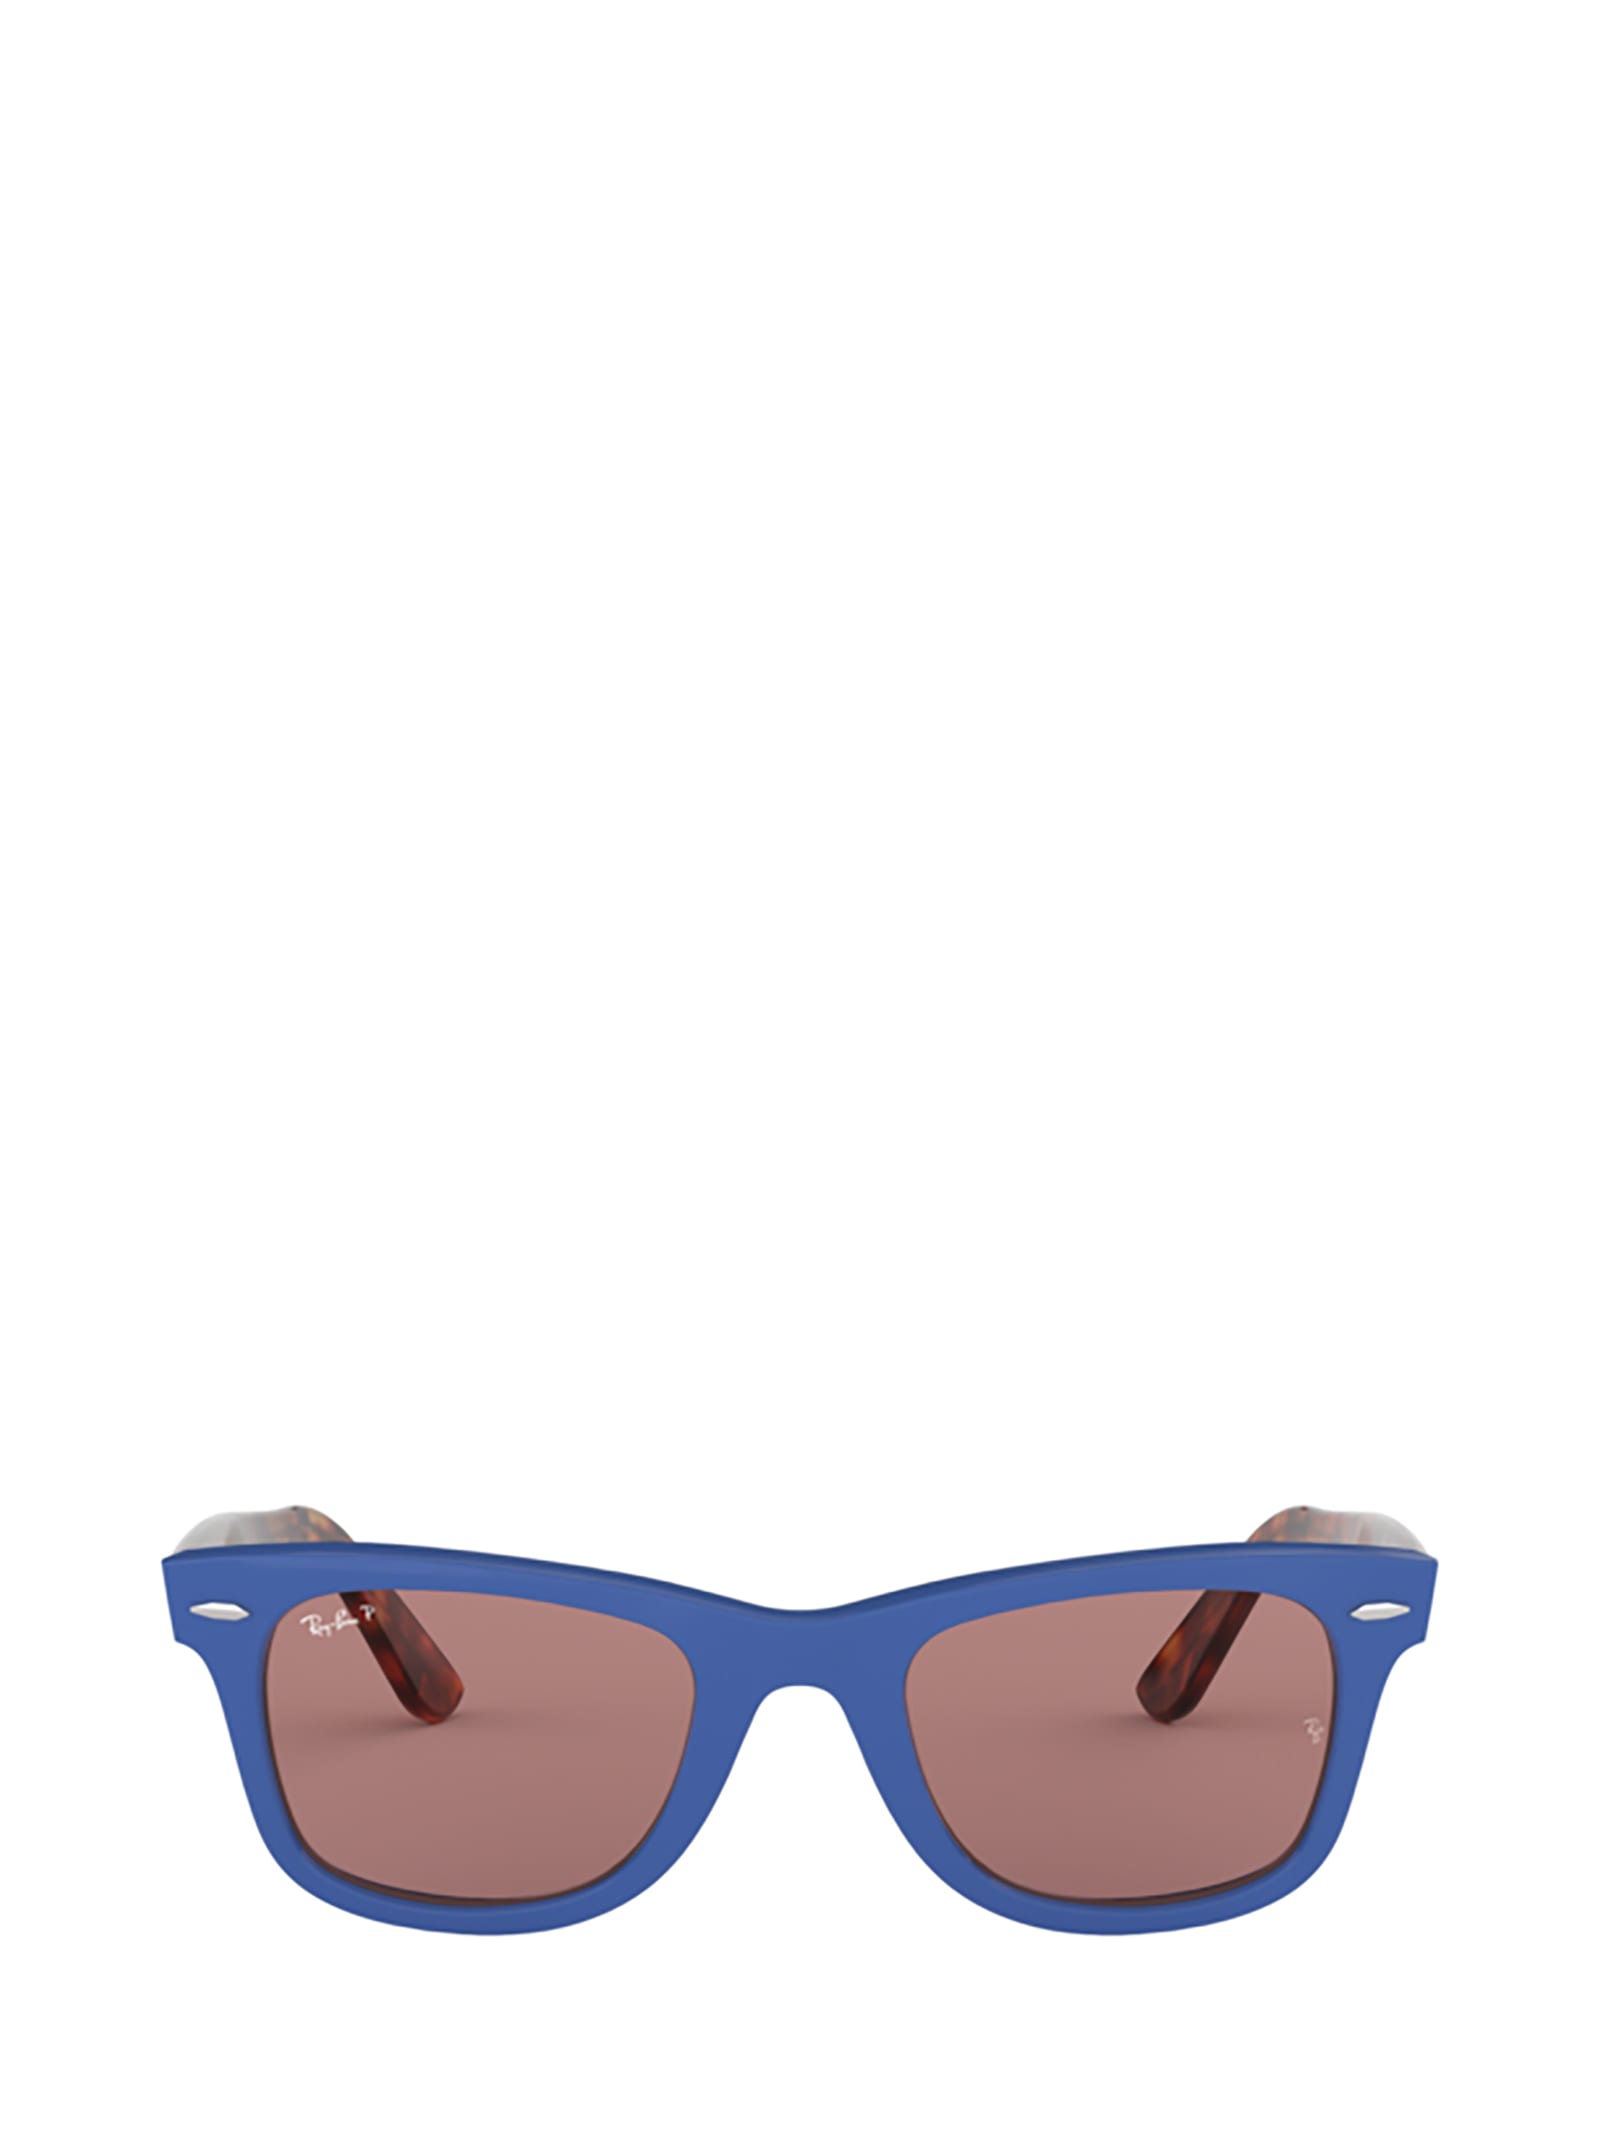 Ray Ban Ray-ban Rb2140 Blue Sunglasses